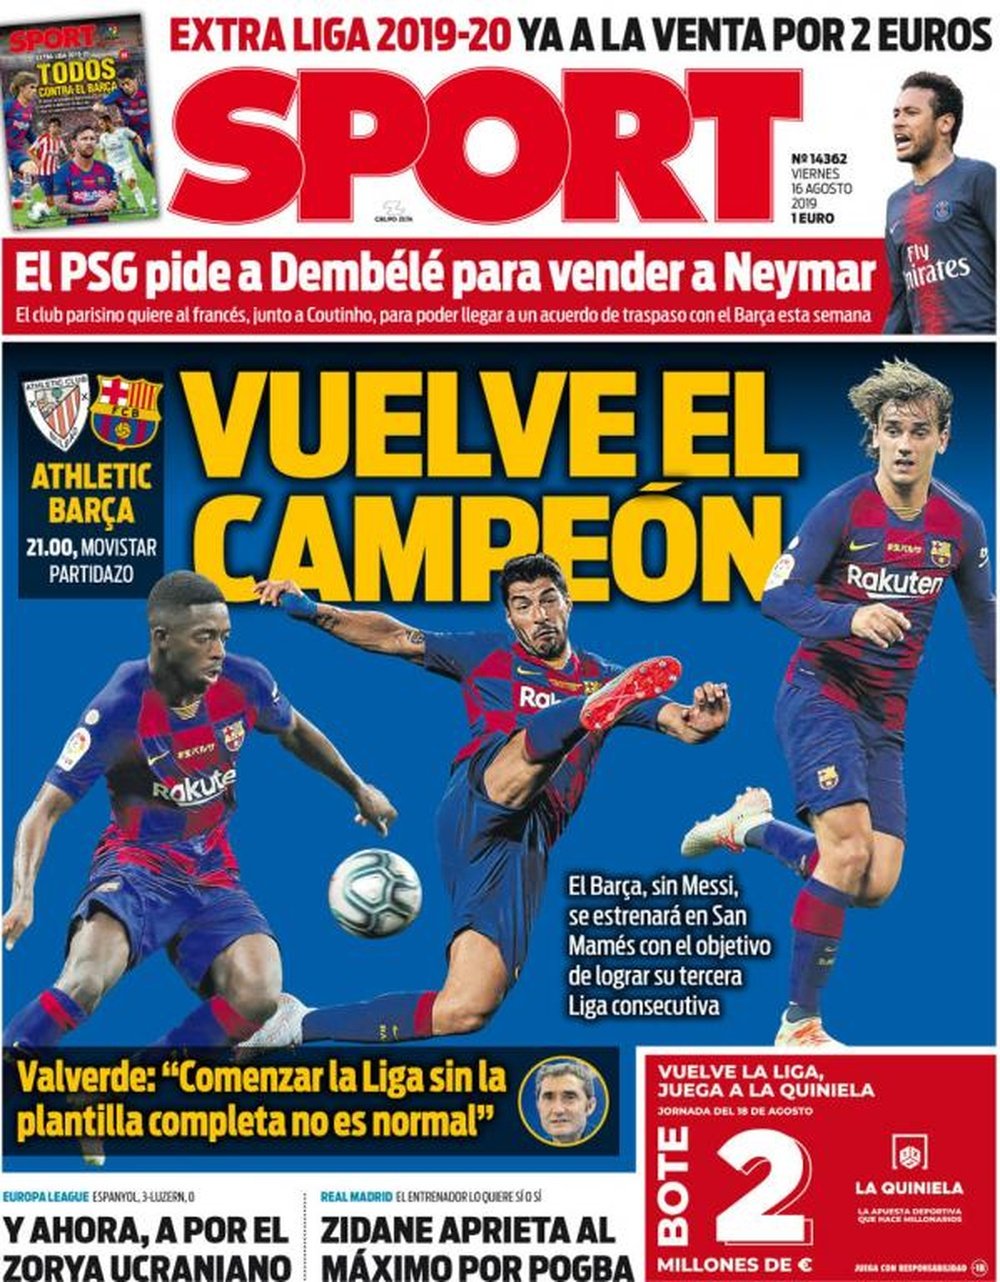 Capa do jornal Sport de 16-08-19. Sport